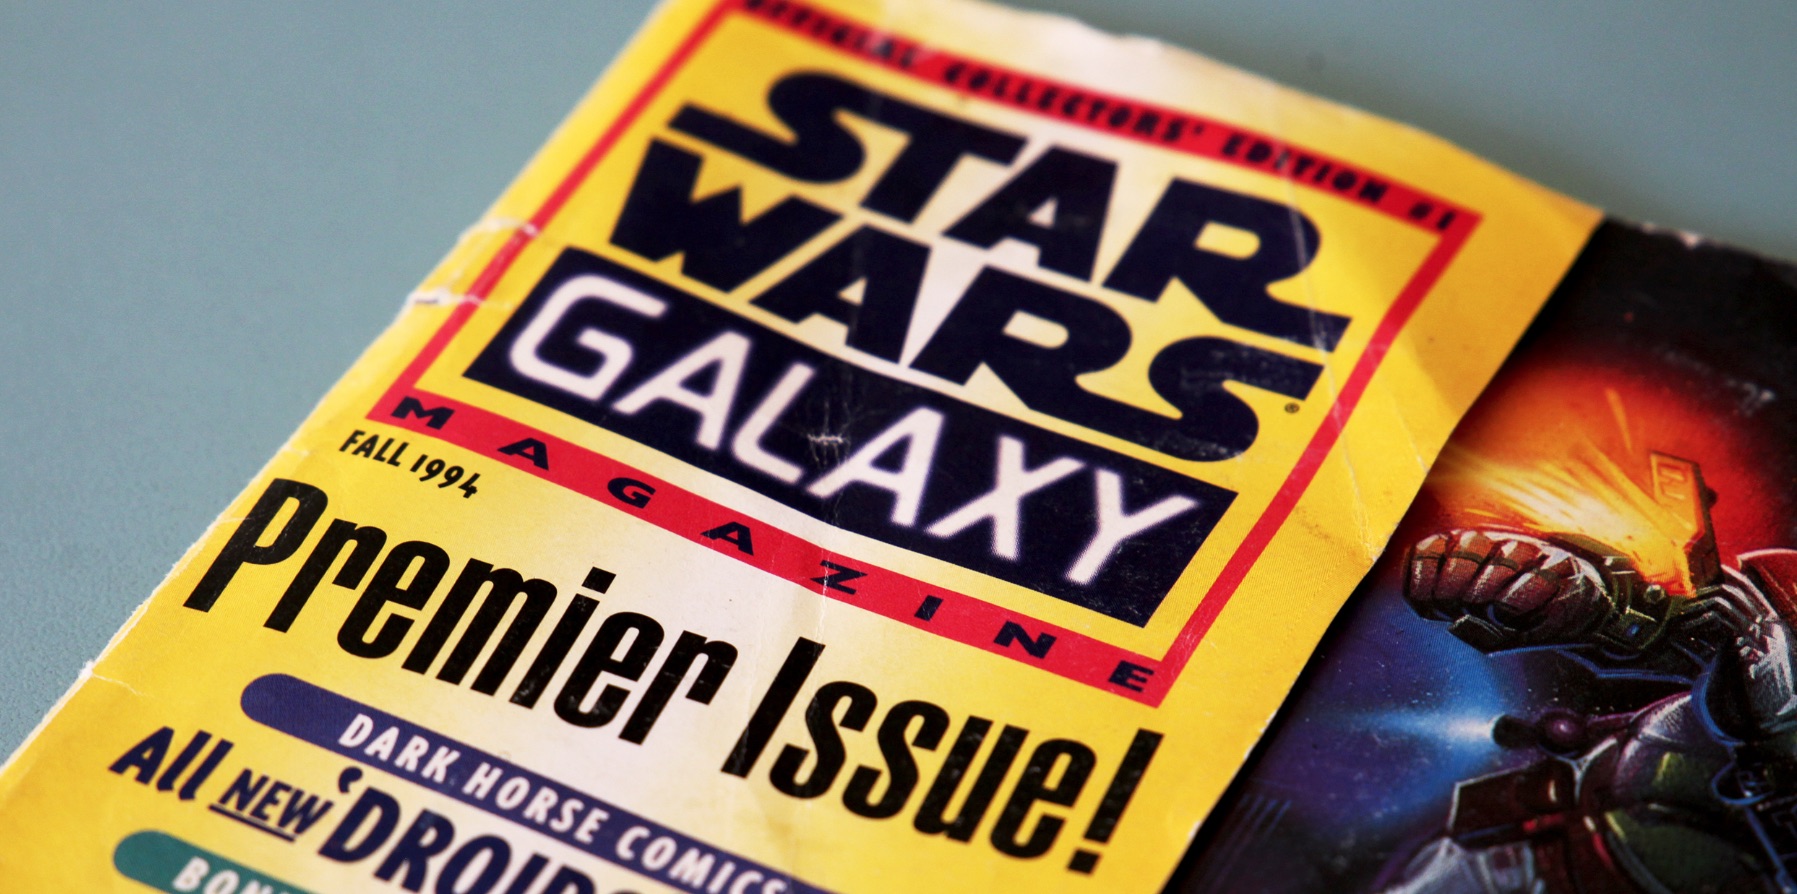 Star Wars Galaxy Magazine.jpg